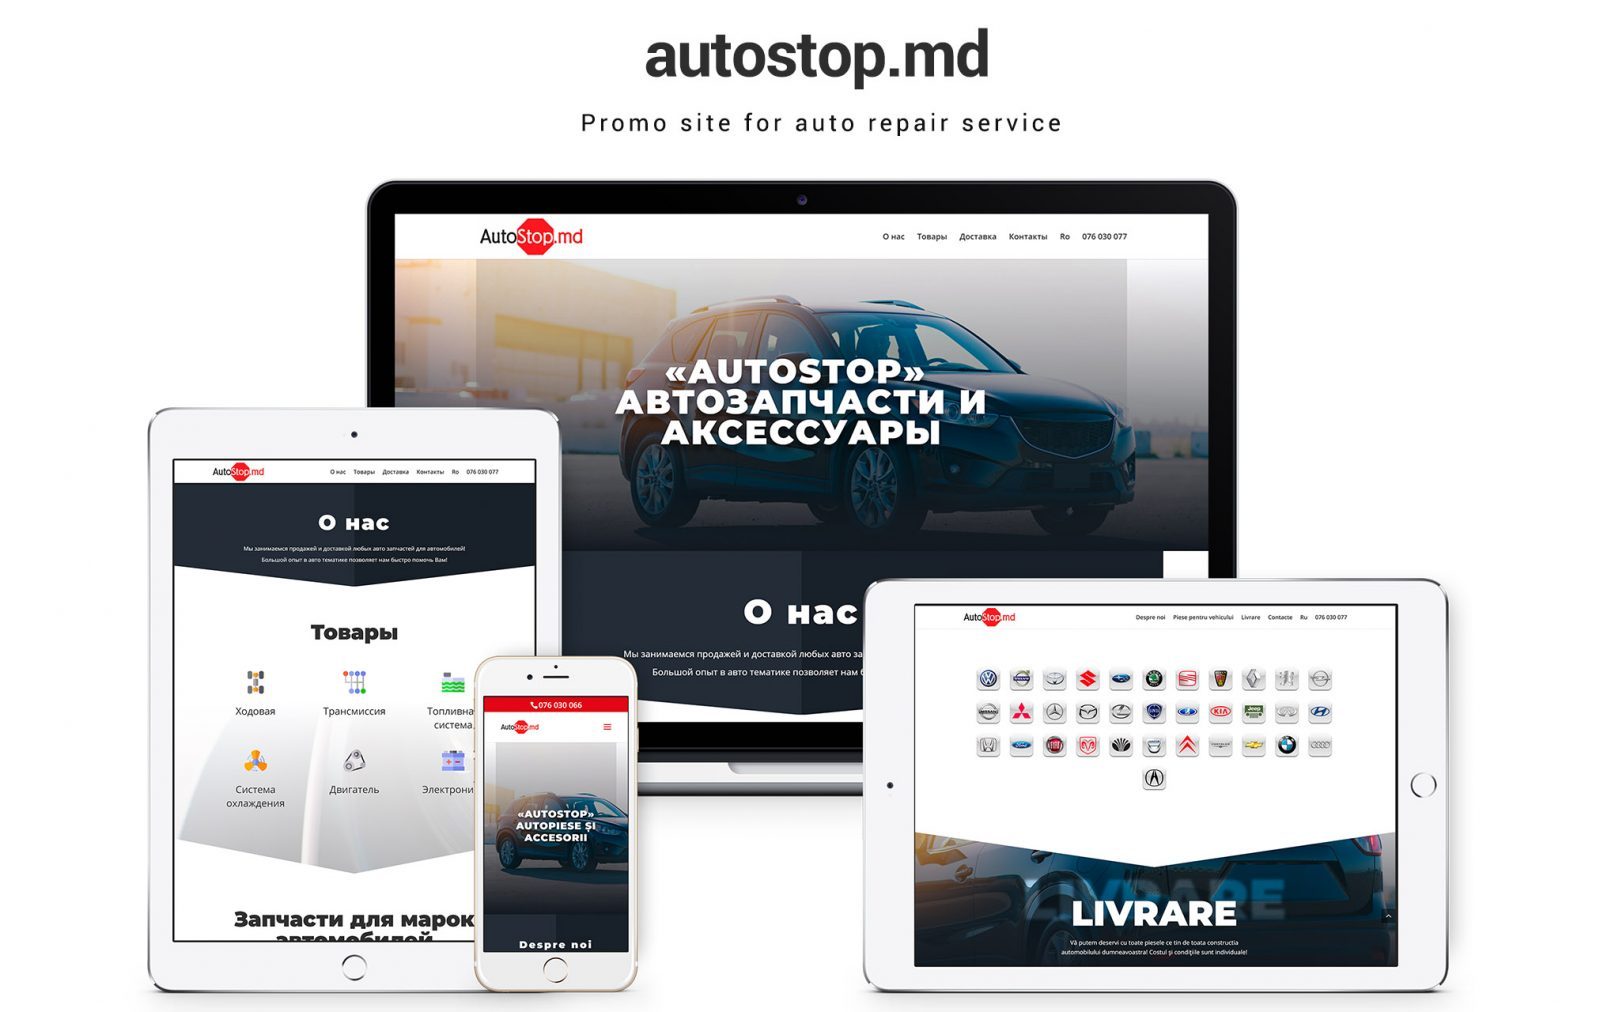 Business card website for a car service - AutoStop Moldova 1